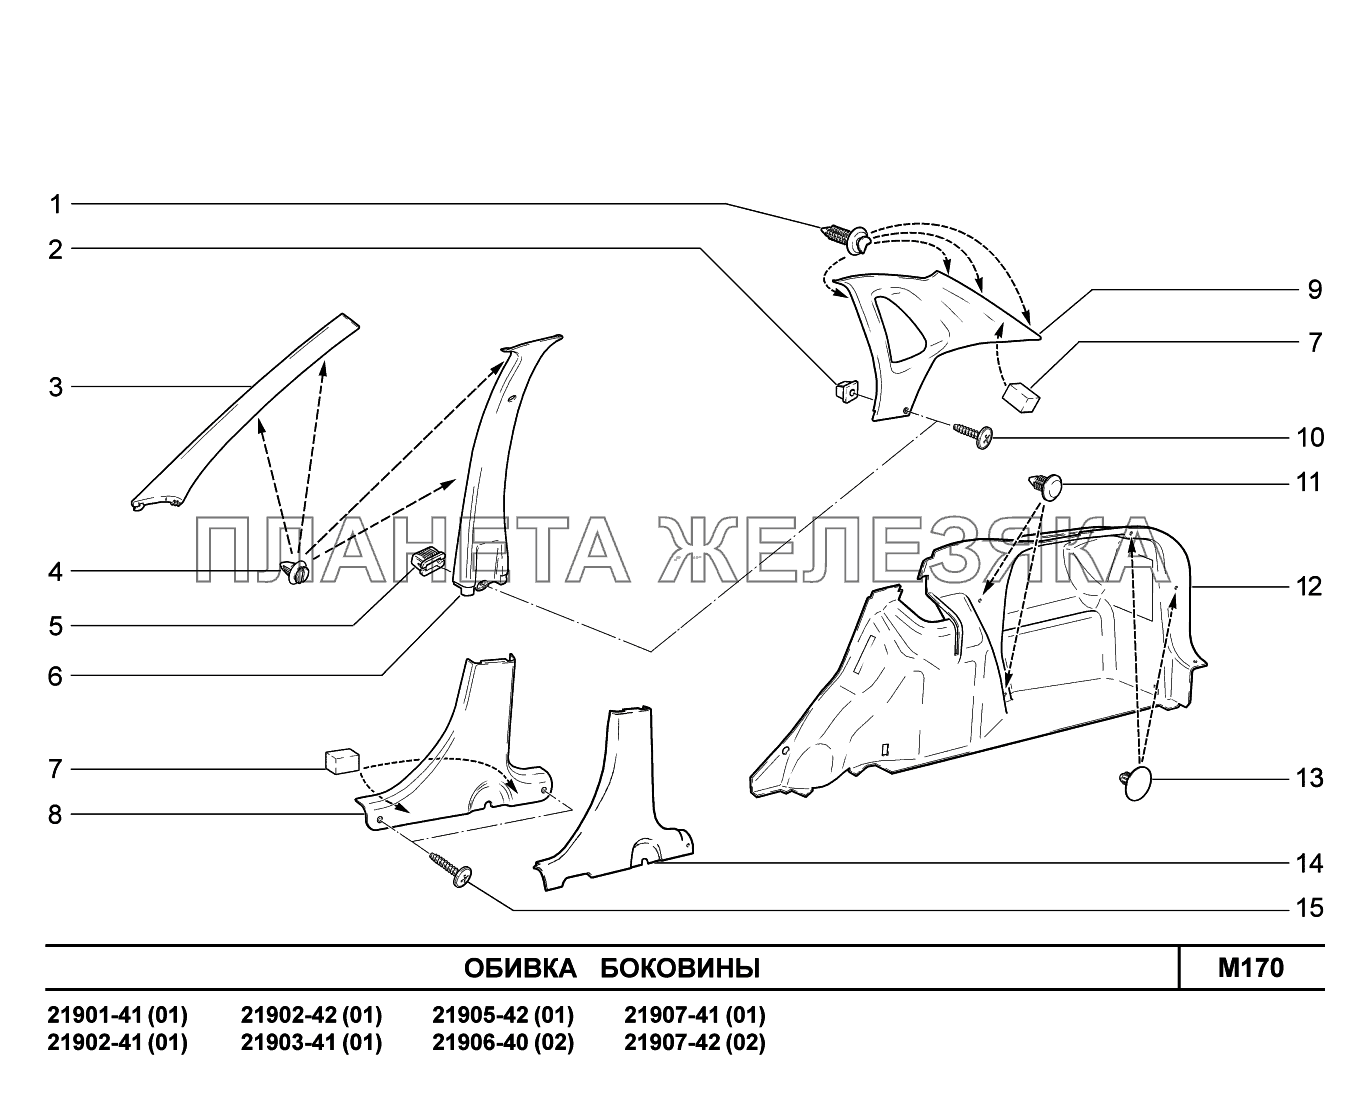 M170. Обивка боковины Lada Granta-2190